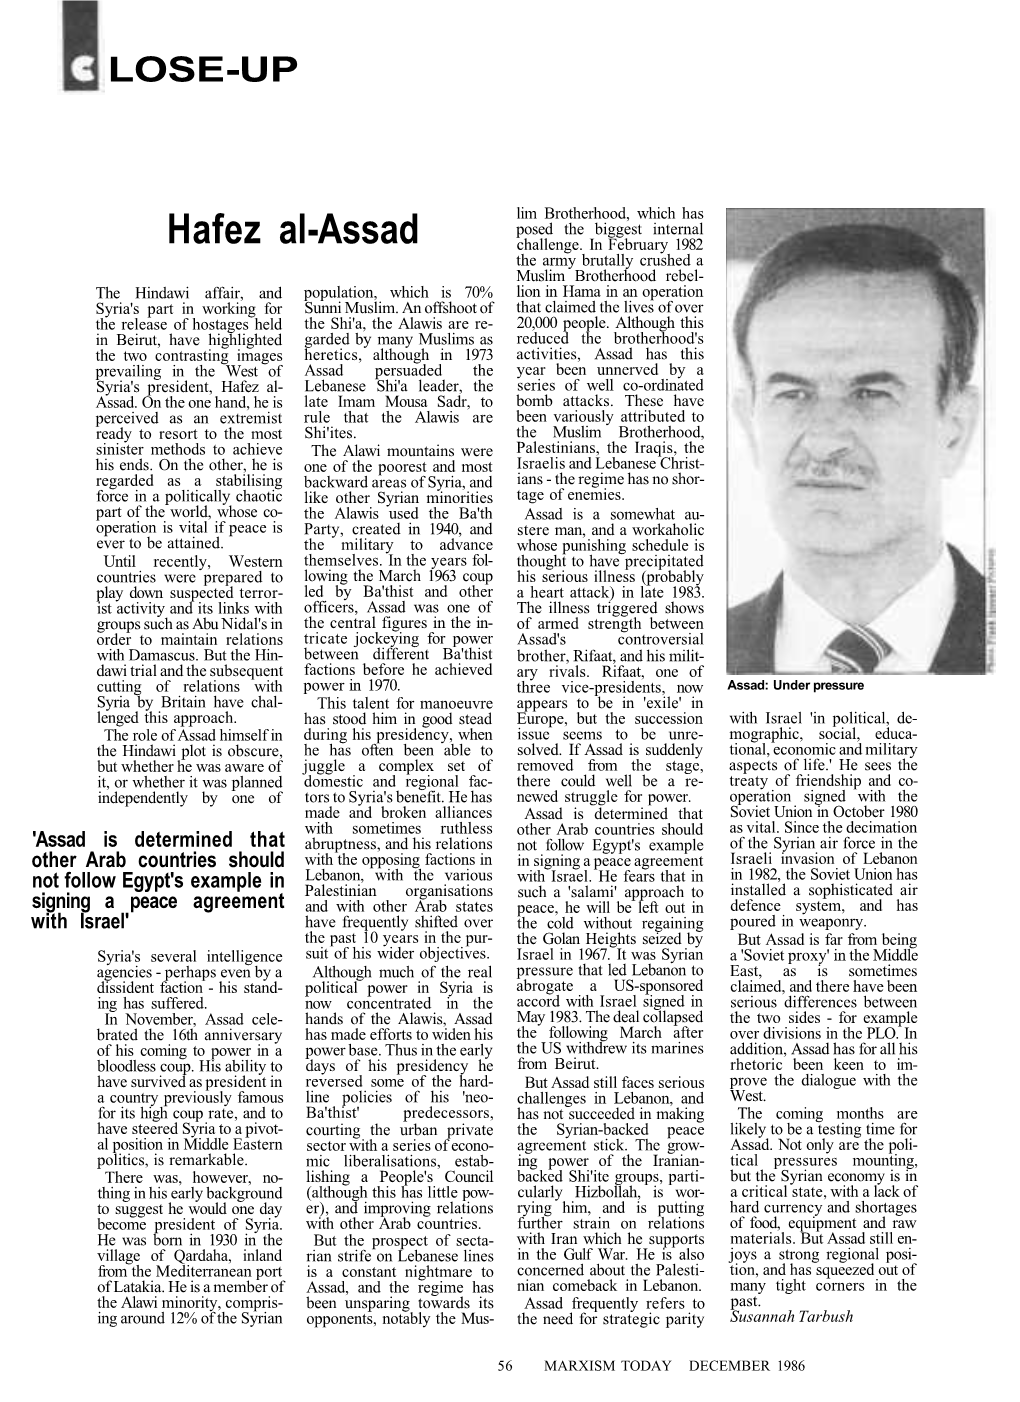 Hafez Al-Assad Challenge